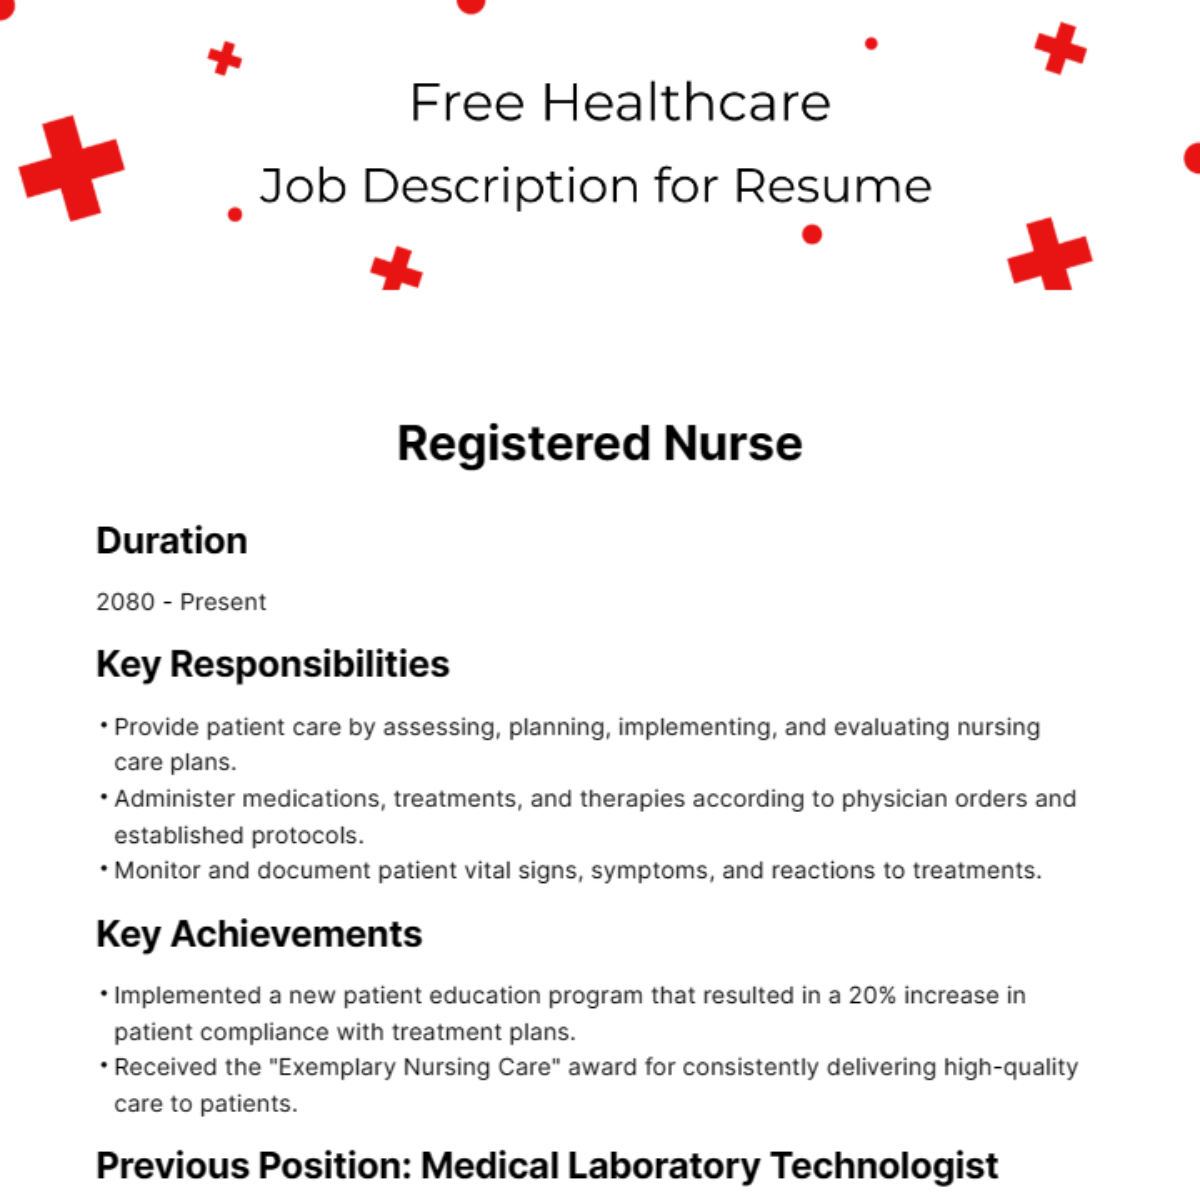 Healthcare Job Description for Resume Template